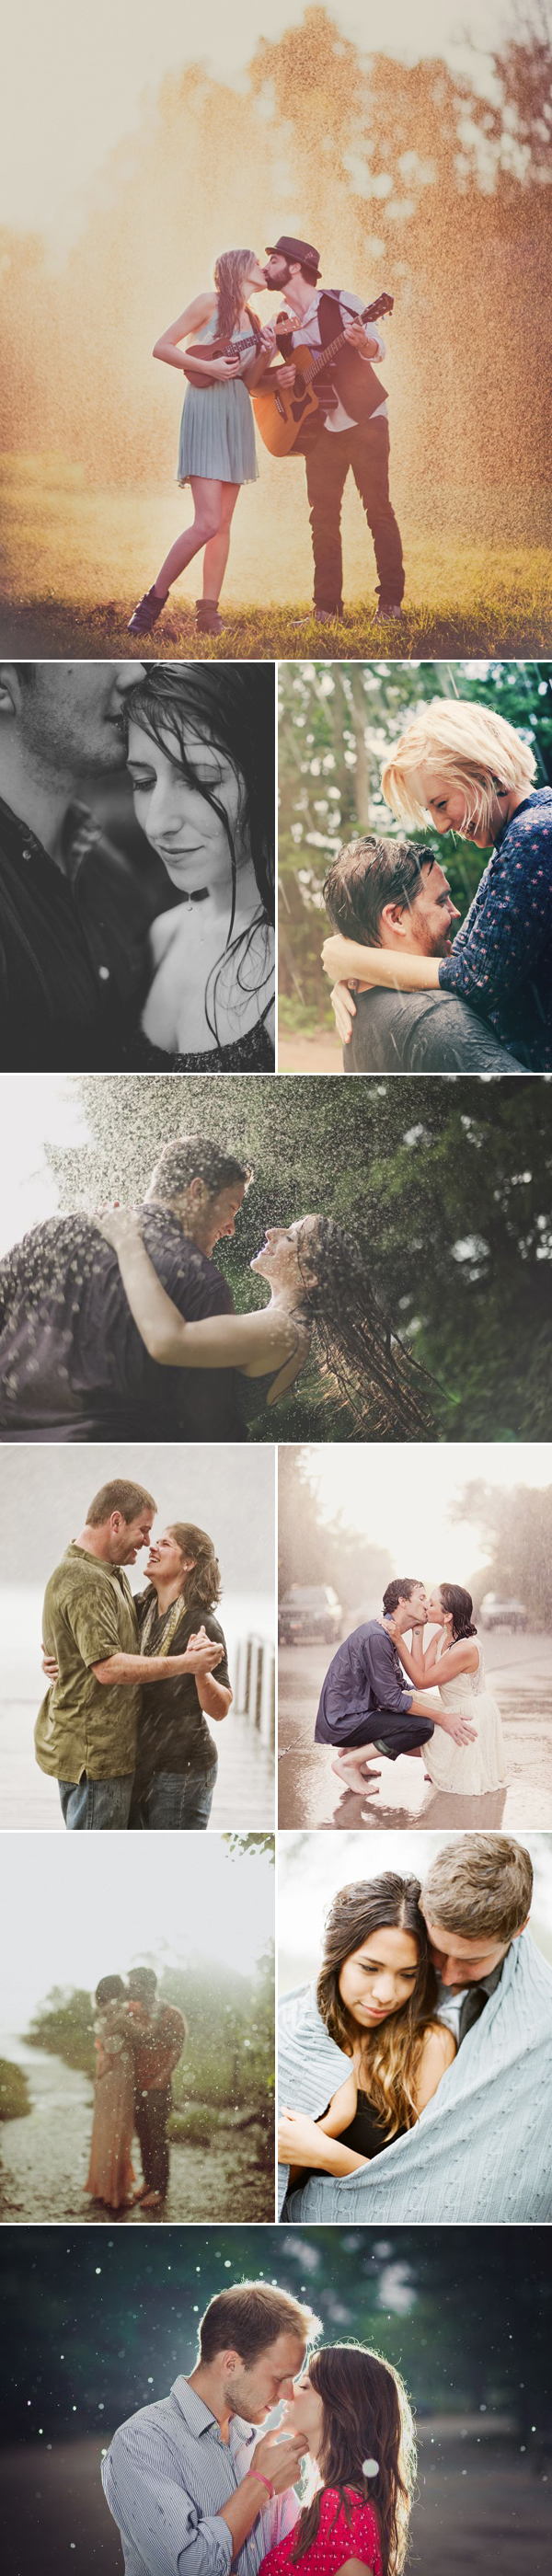 16 Romantic Rainy Day Engagement Photo Ideas - Praise Wedding